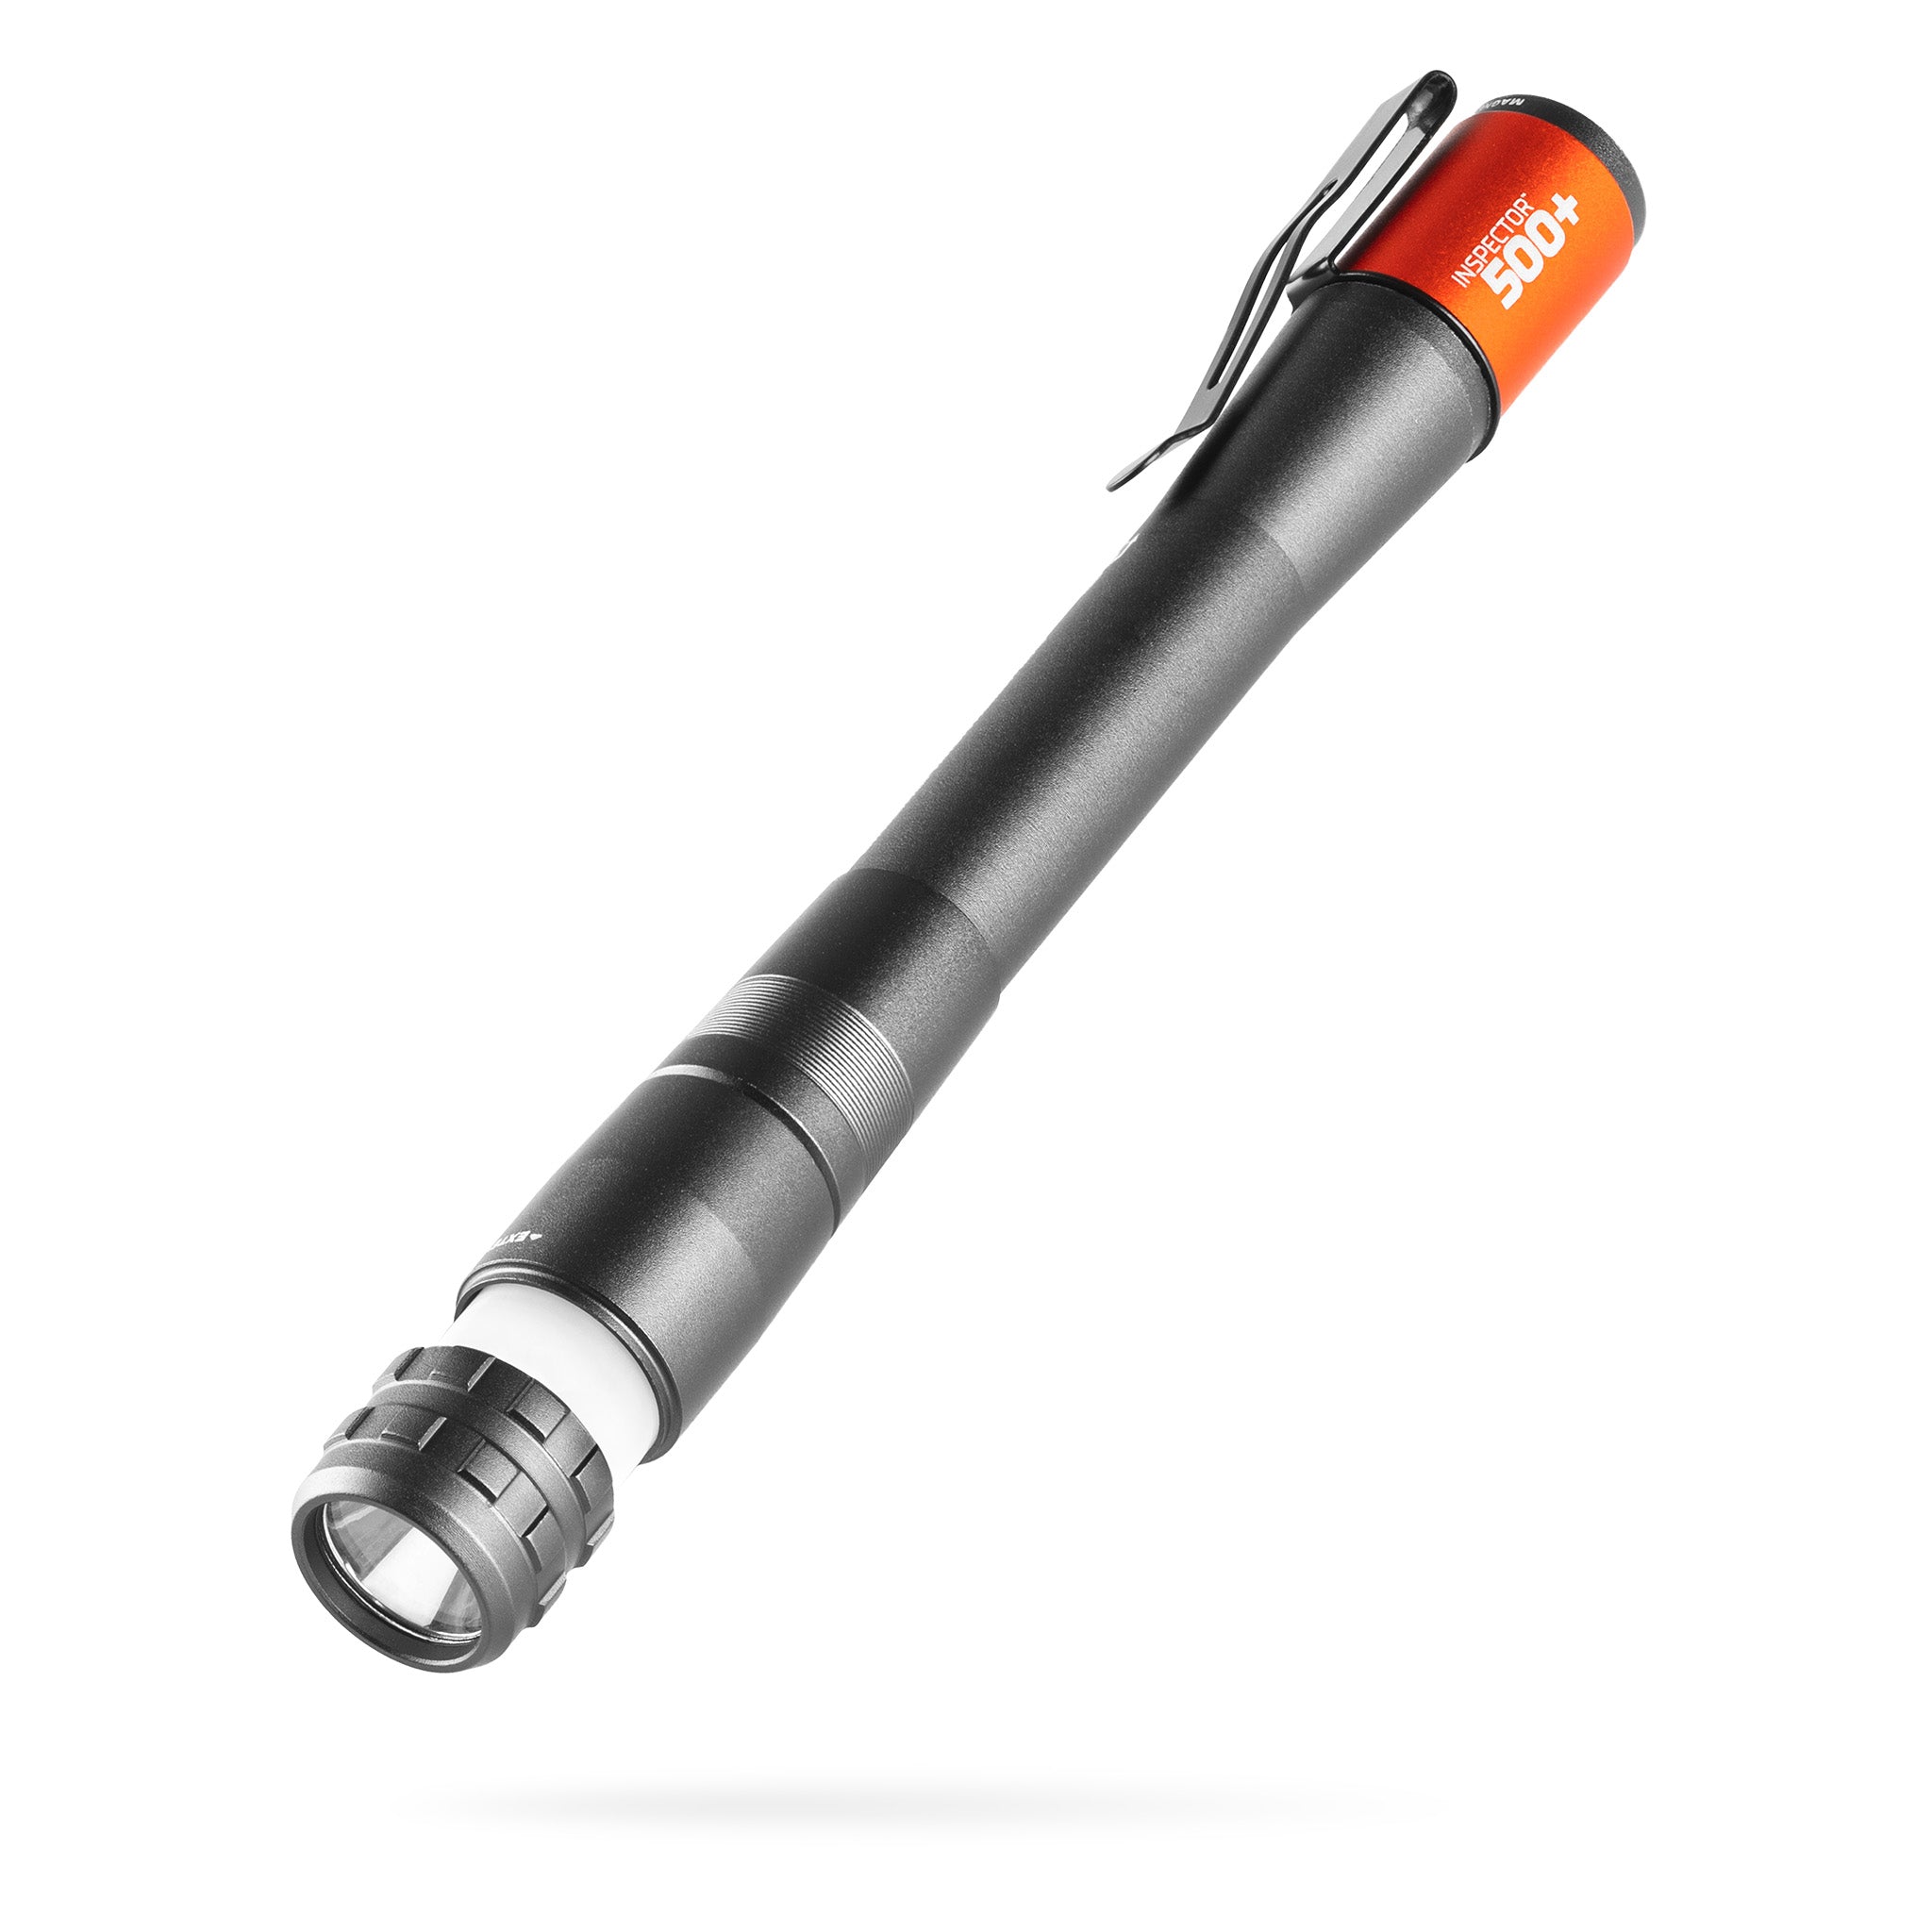 INSPECTOR 500+ Pen Sized Pocket Inspection Light